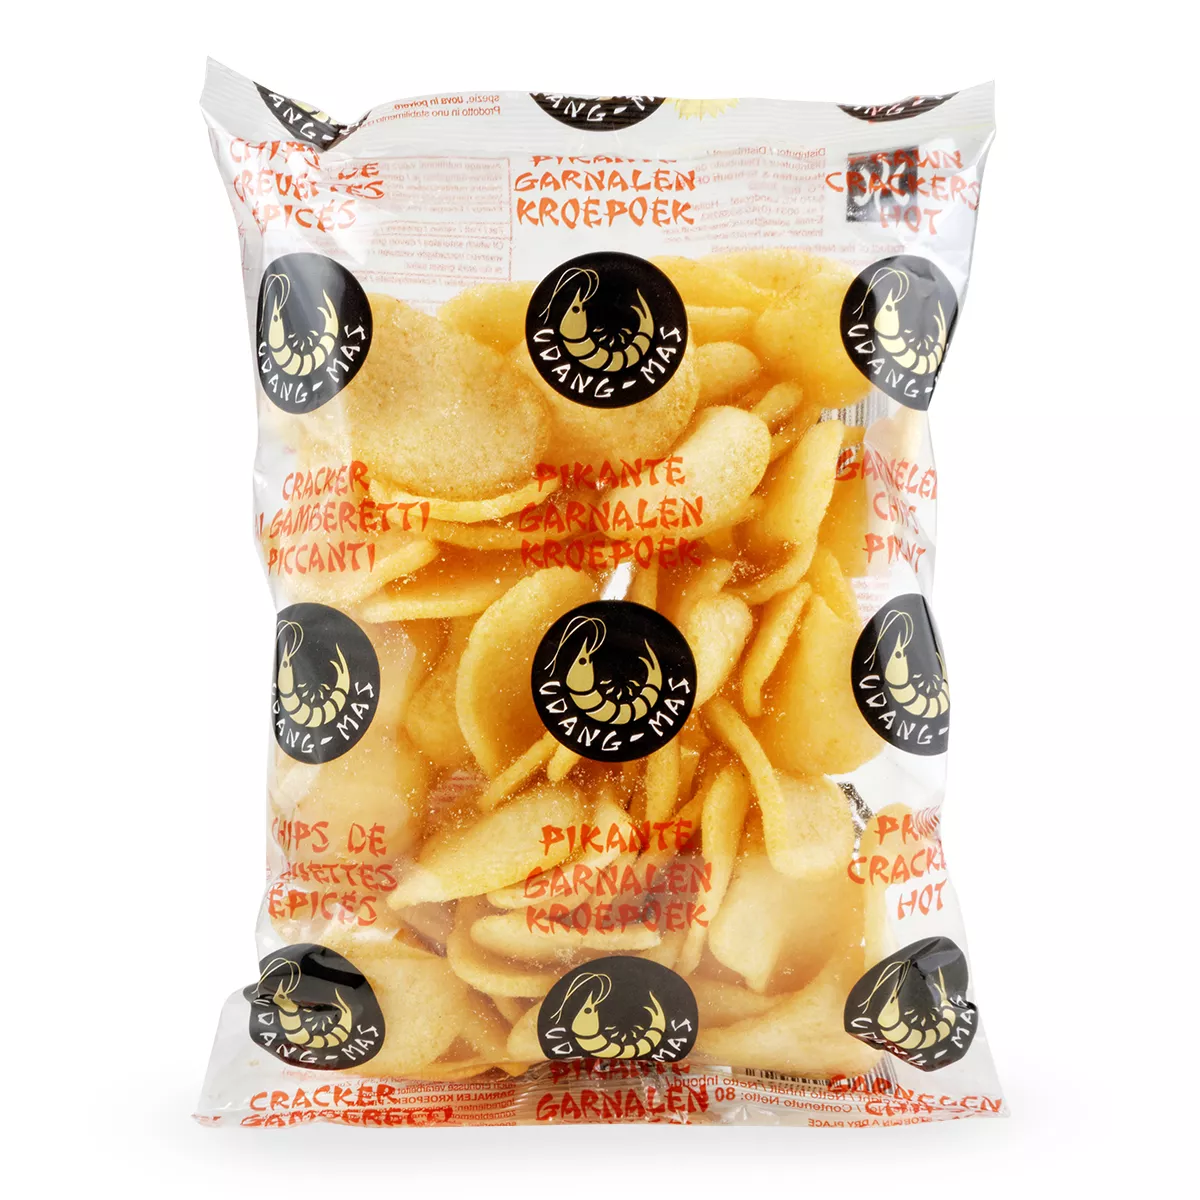 Chips de creveti (spicy) H&S 80g, [],asianfood.ro